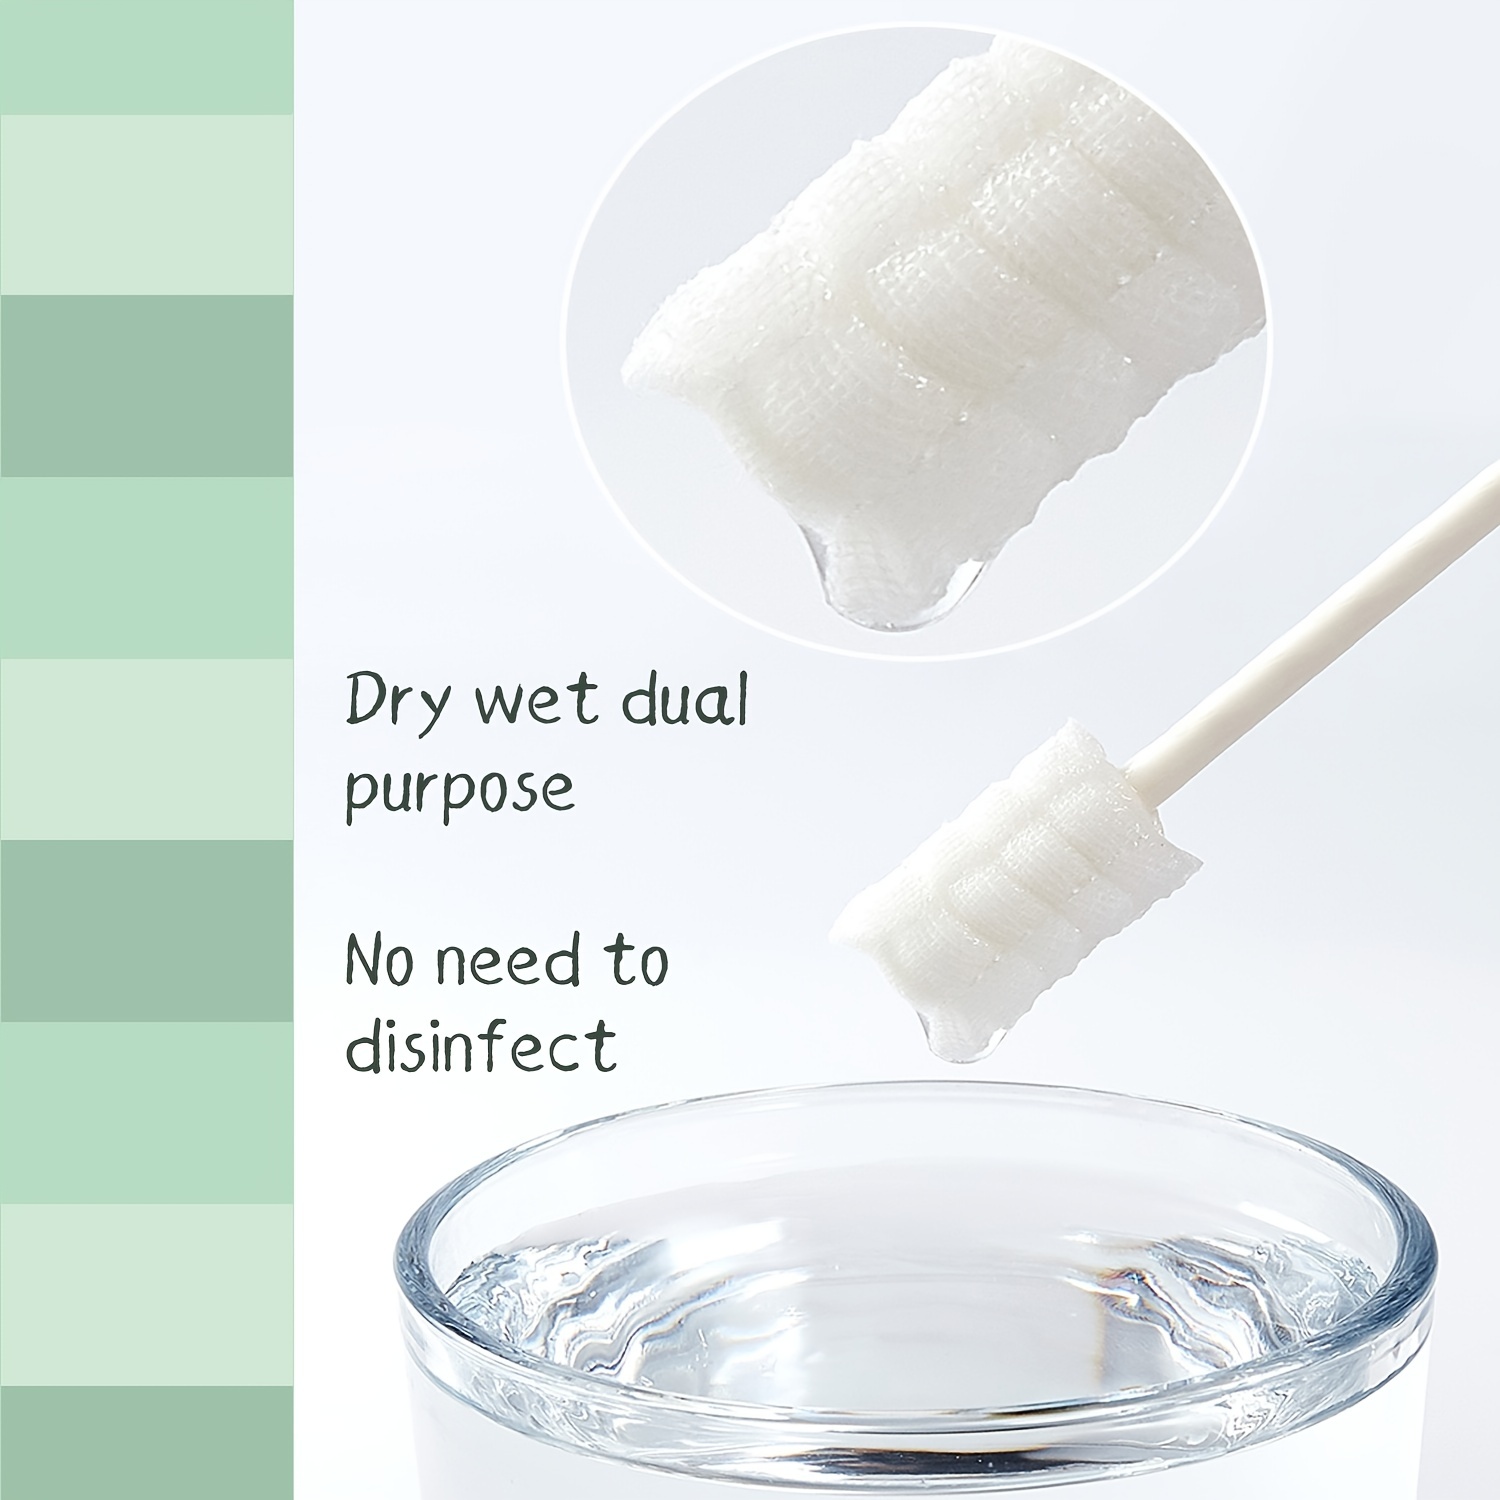 Cepillo de dientes de gasa para bebé, limpiador de lengua, 40 unidades  desechables, para bebés de 0 a 36 meses + 1 cepillo de dientes de dedo  gratis - OdontoFarma